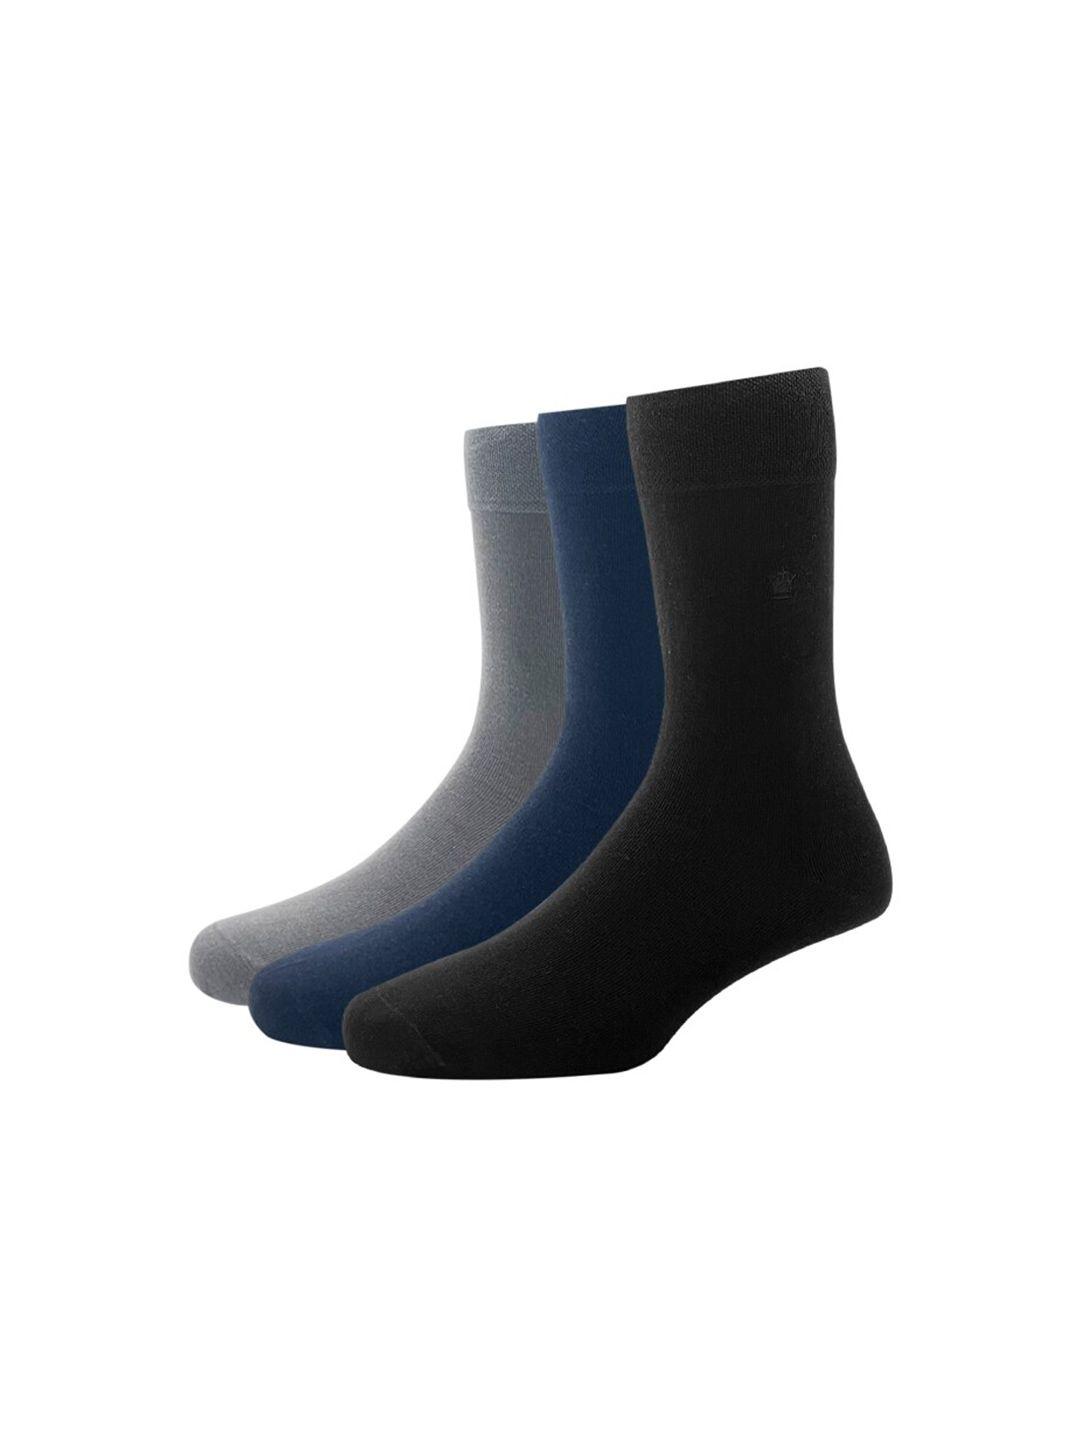 louis philippe men pack of 3 navy blue calf length socks